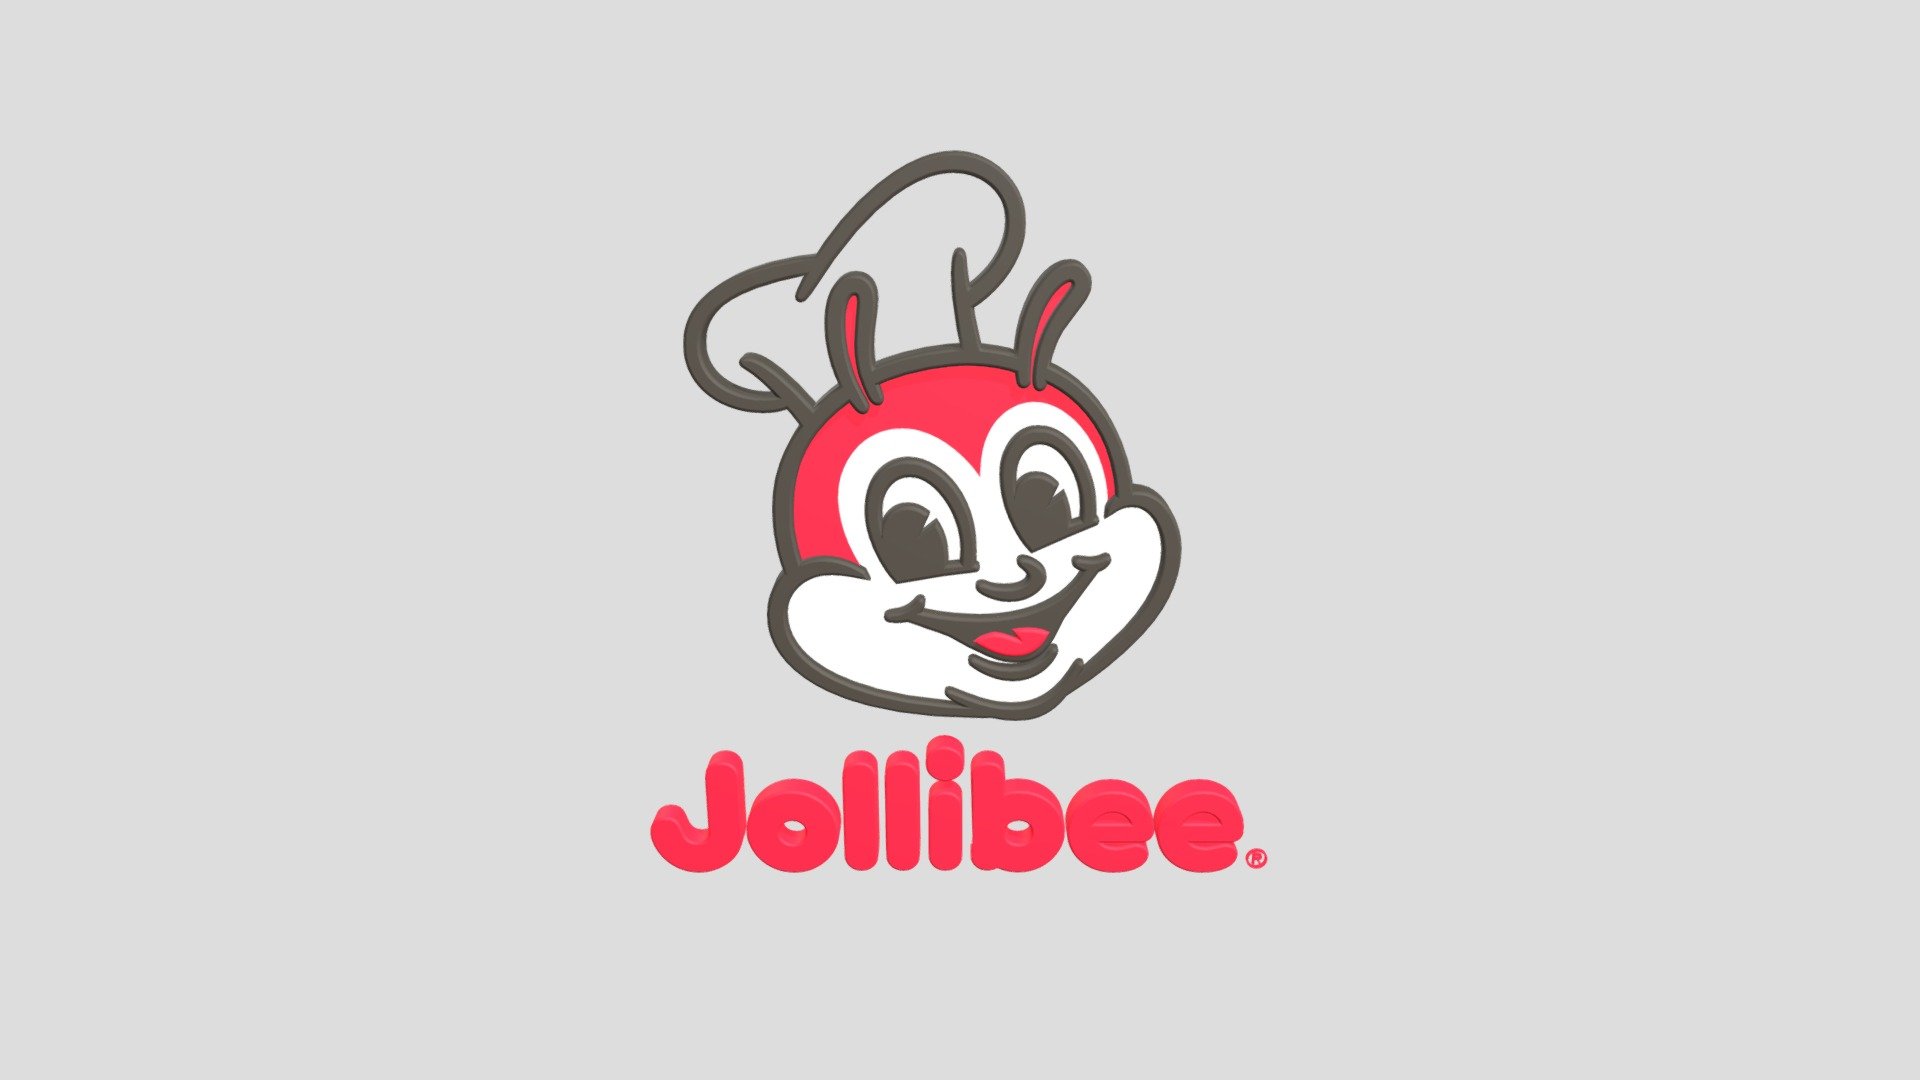 Jollibee Logo Variations